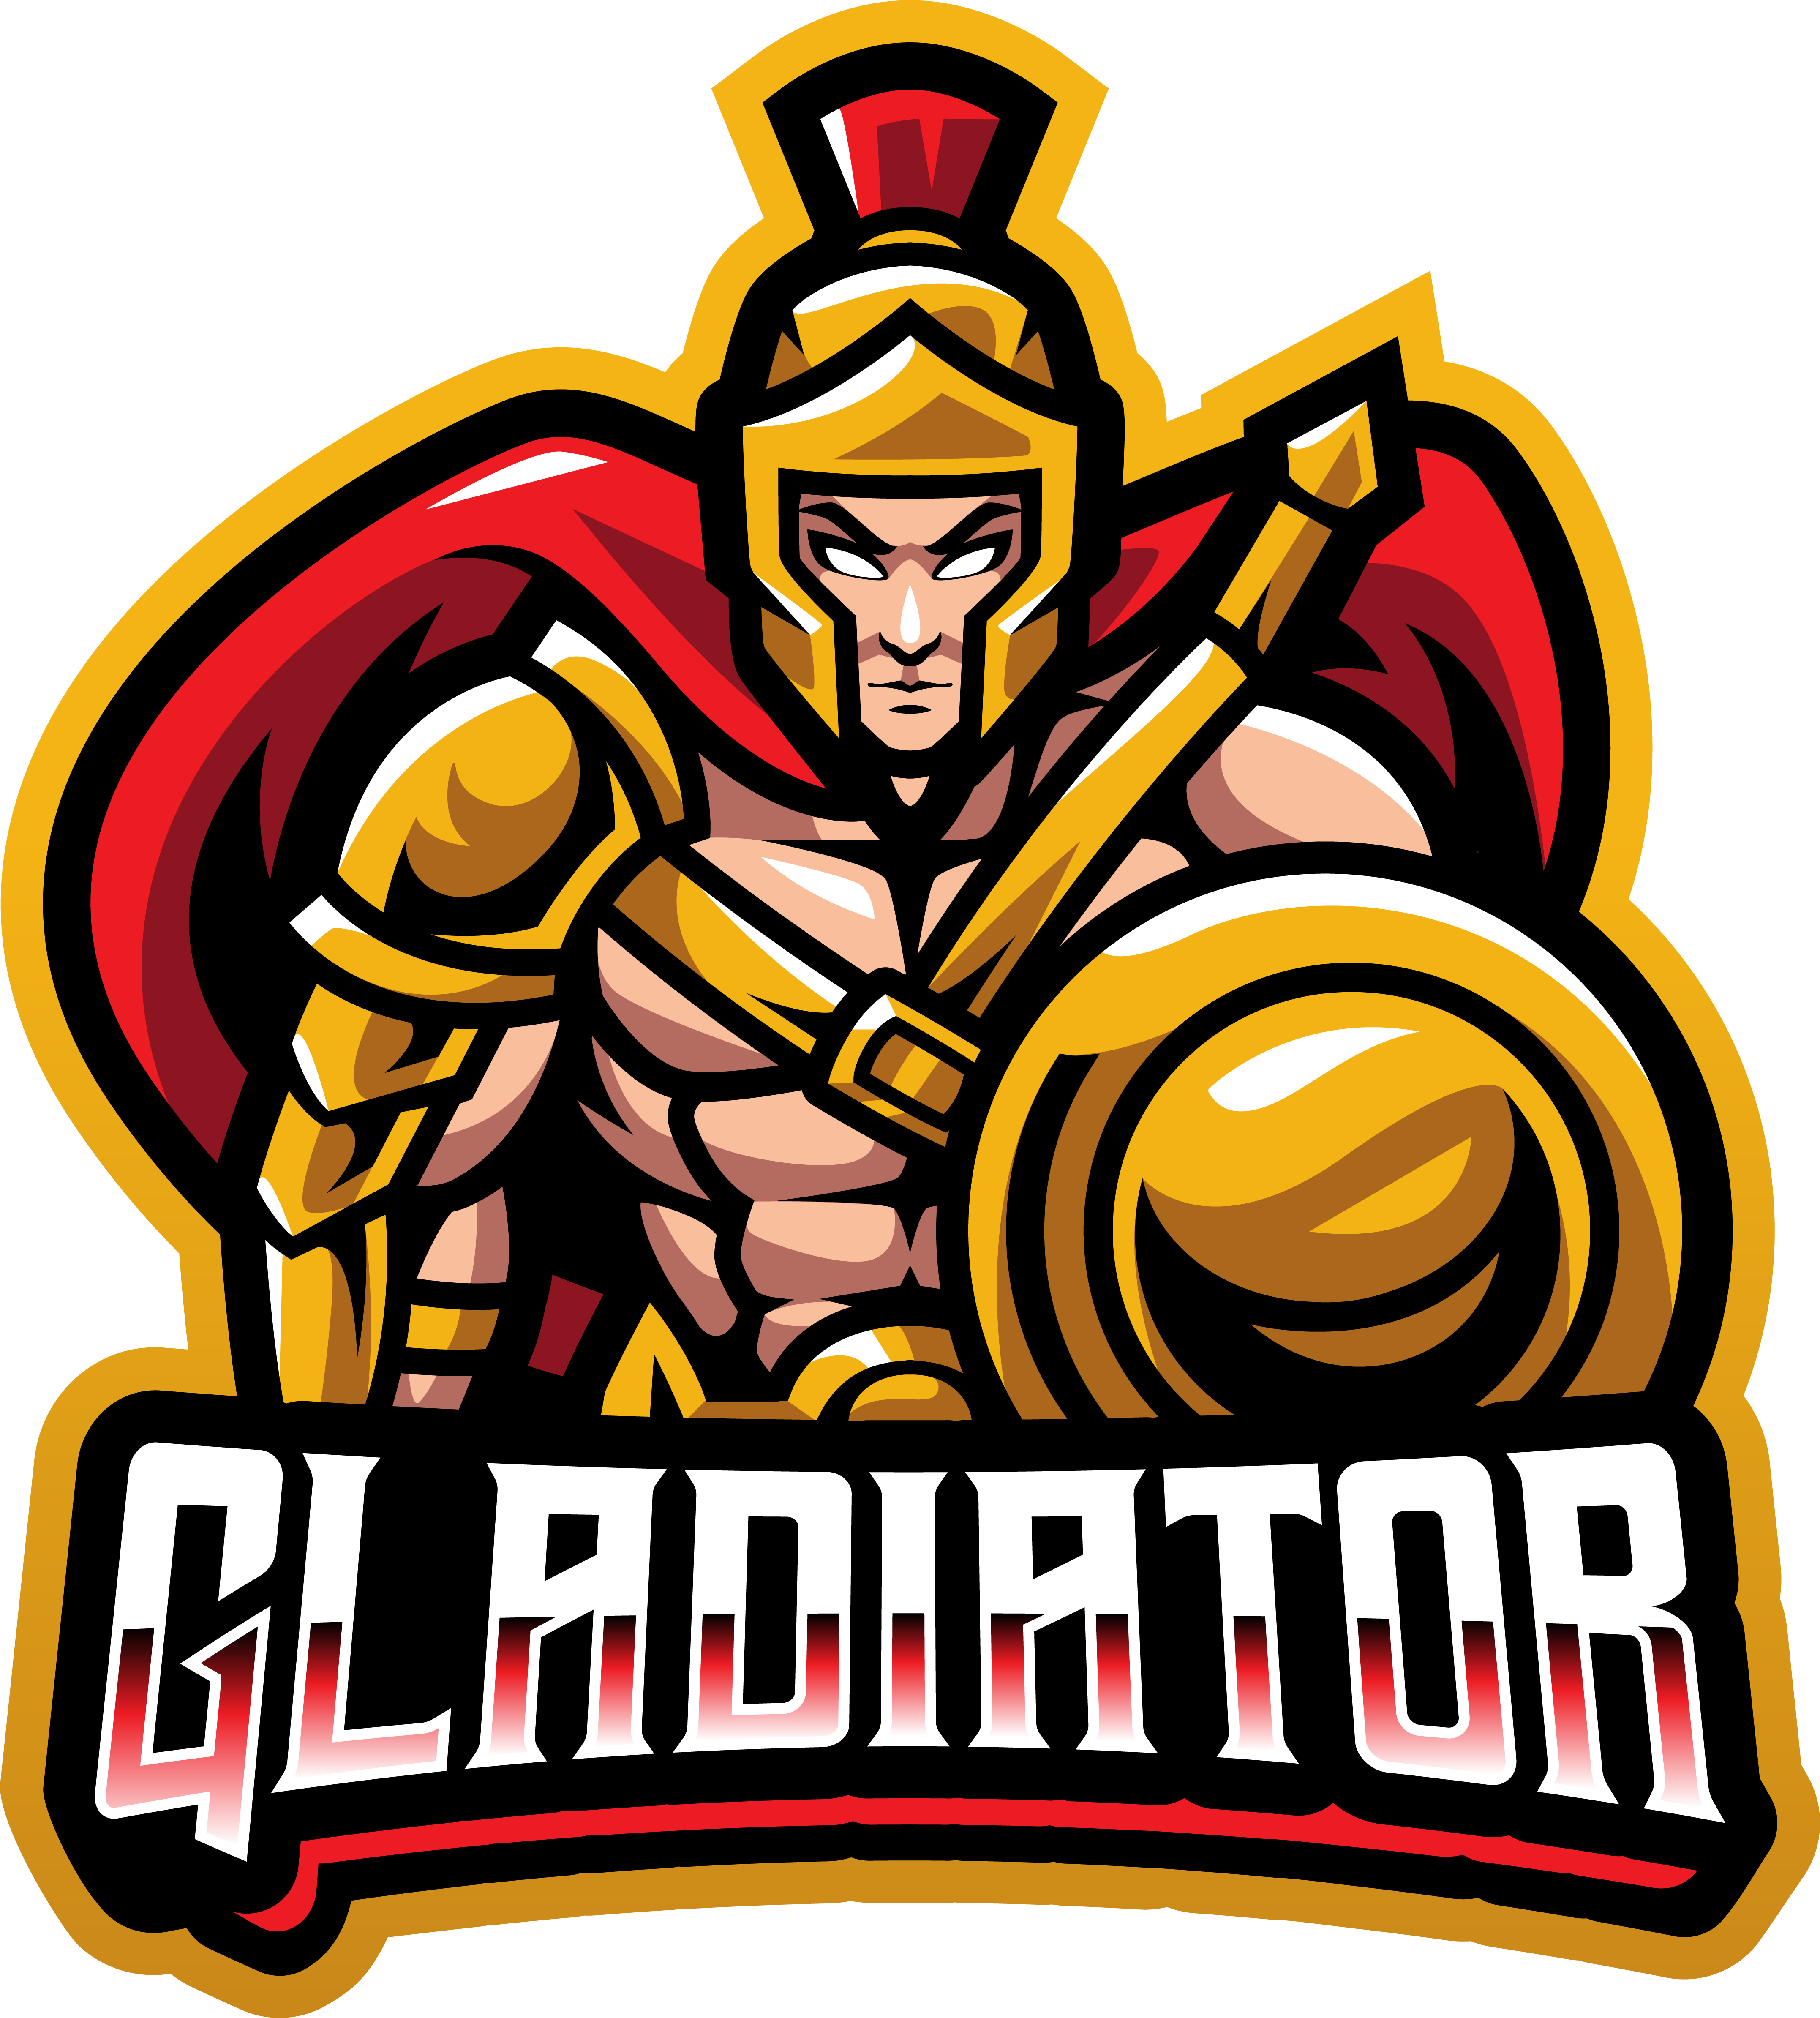 Gladiator esport mascot logo design By Visink | TheHungryJPEG